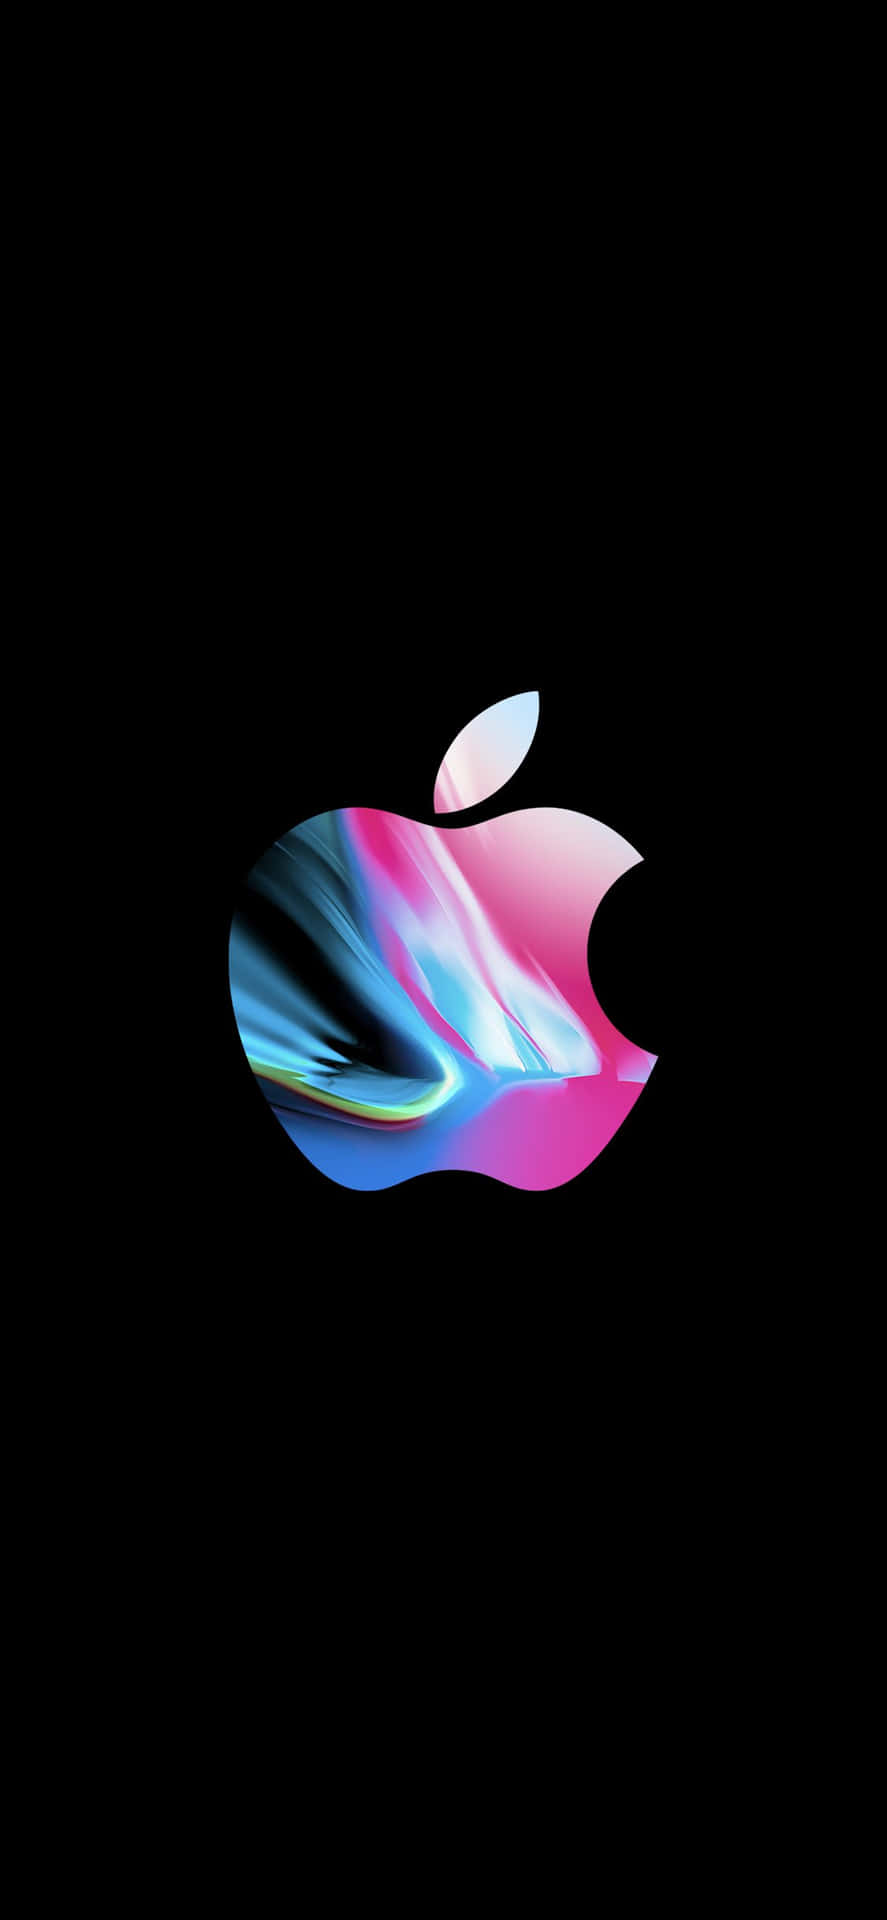 Iphone X Apple Logo Wallpaper